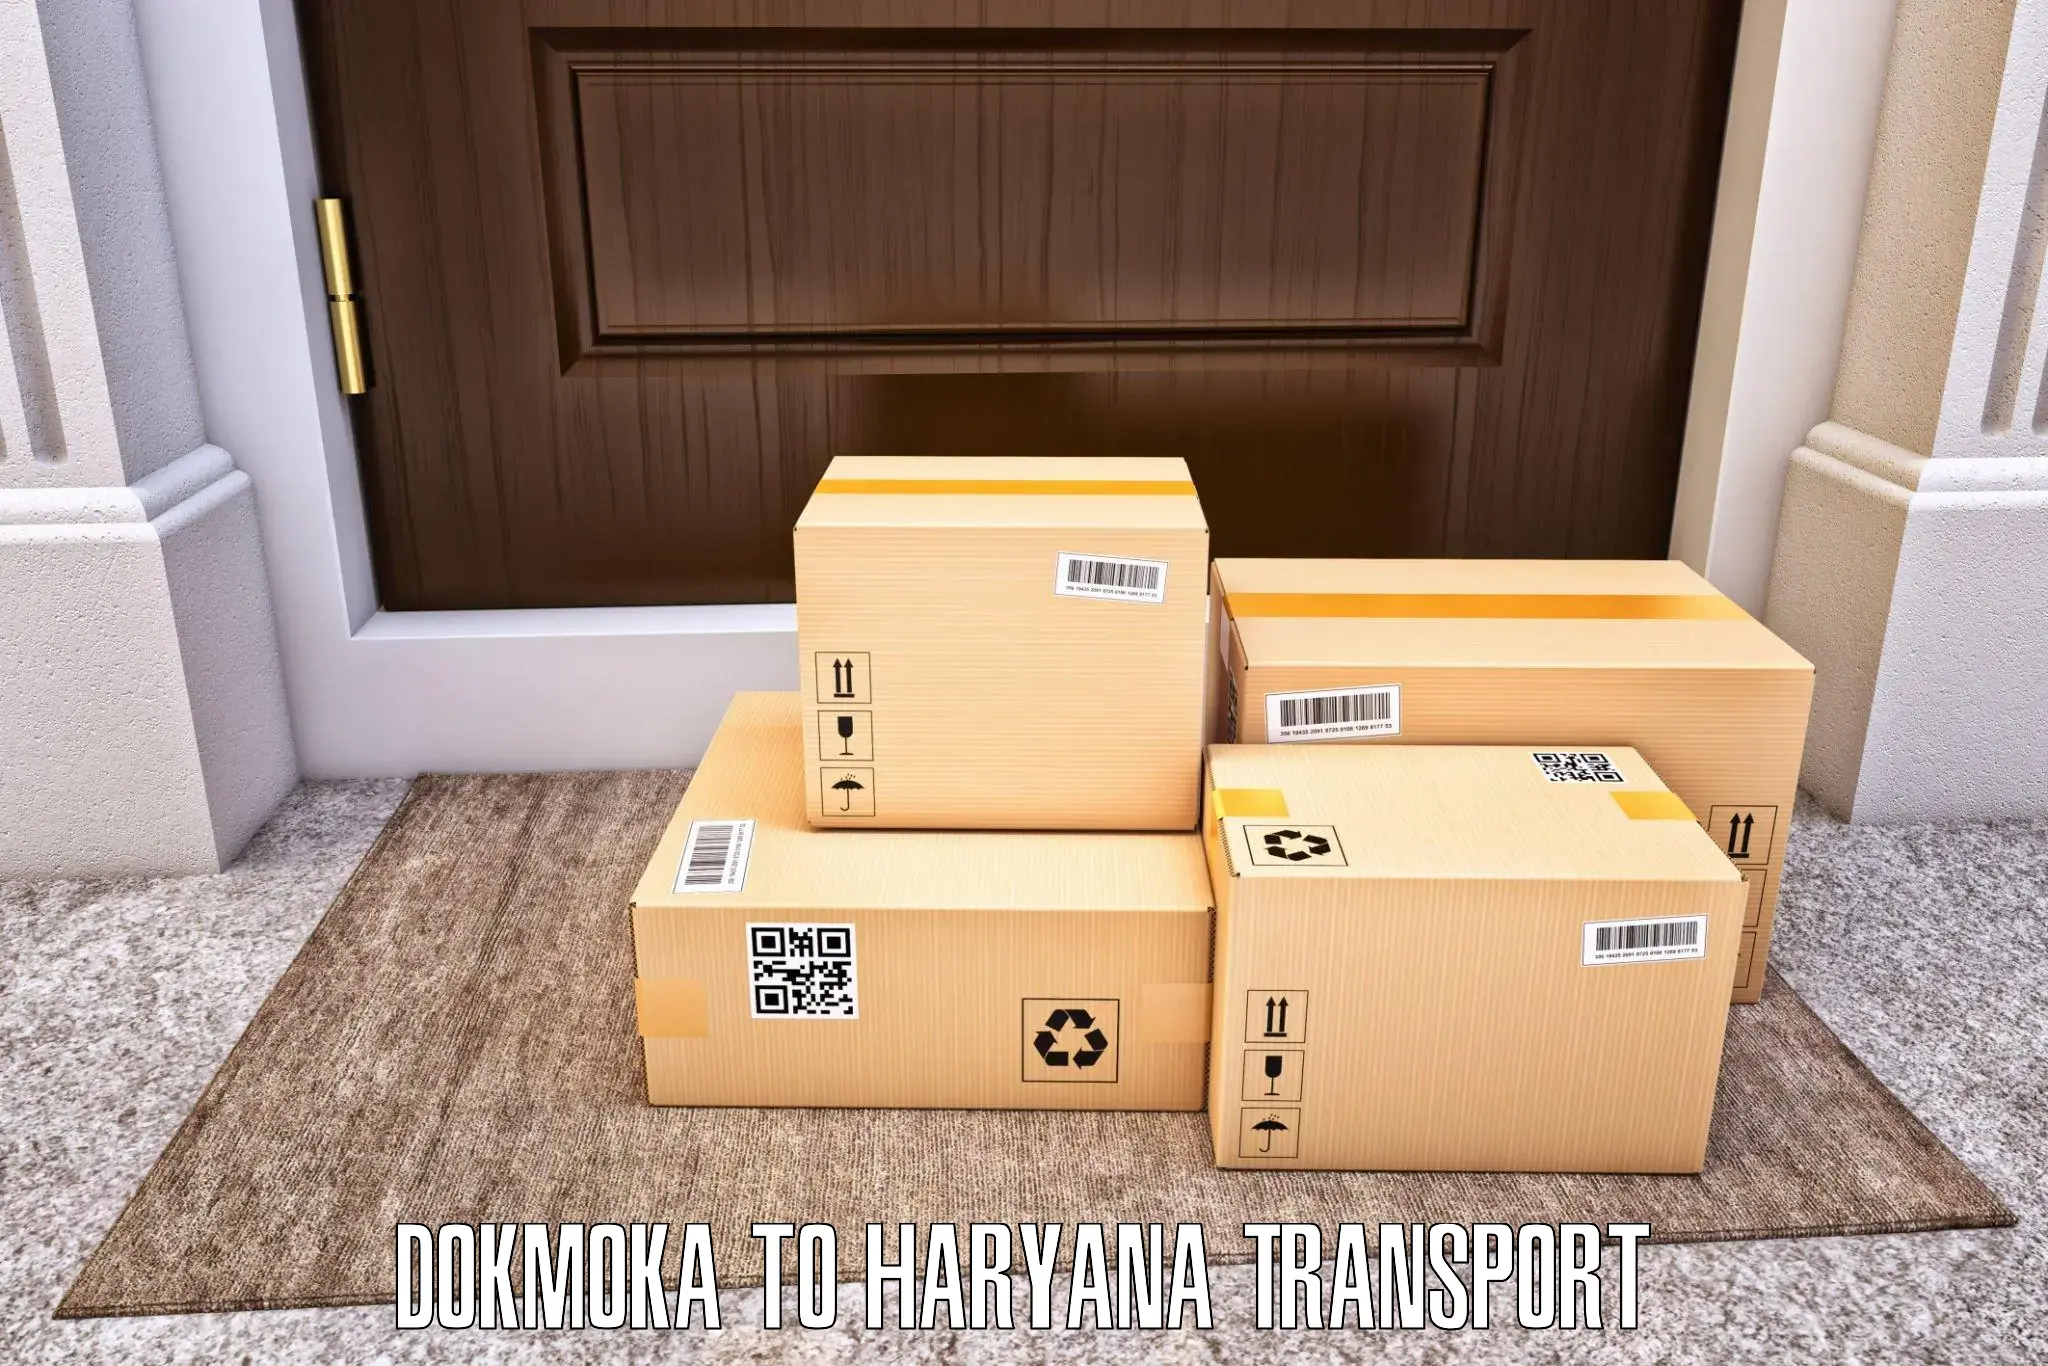 Two wheeler parcel service Dokmoka to NCR Haryana